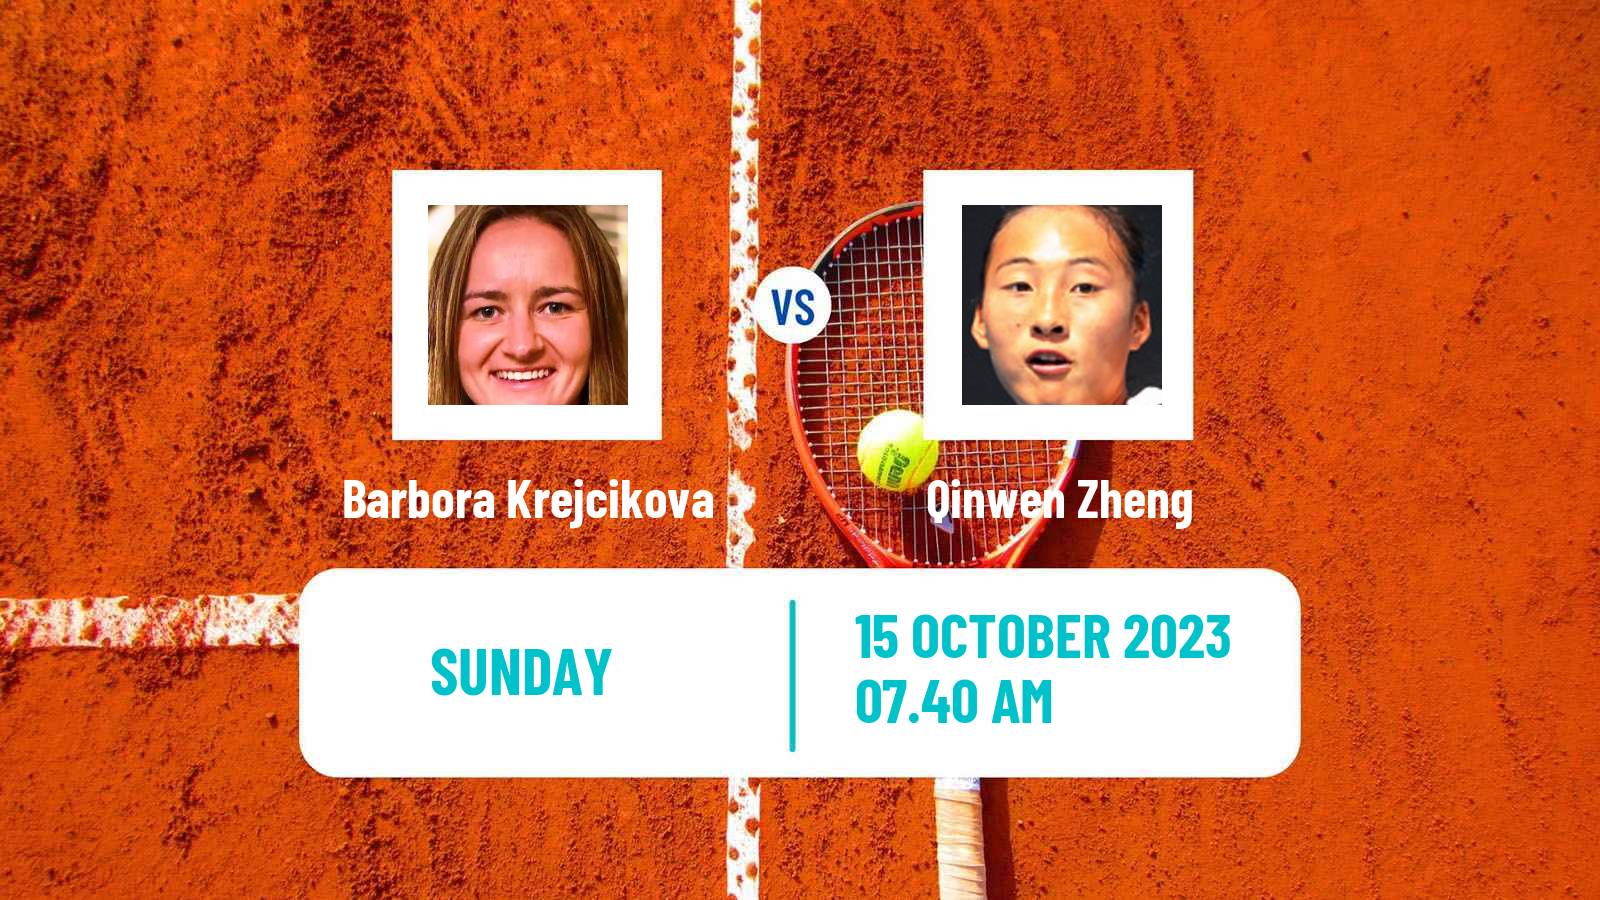 Tennis WTA Zhengzhou Barbora Krejcikova - Qinwen Zheng